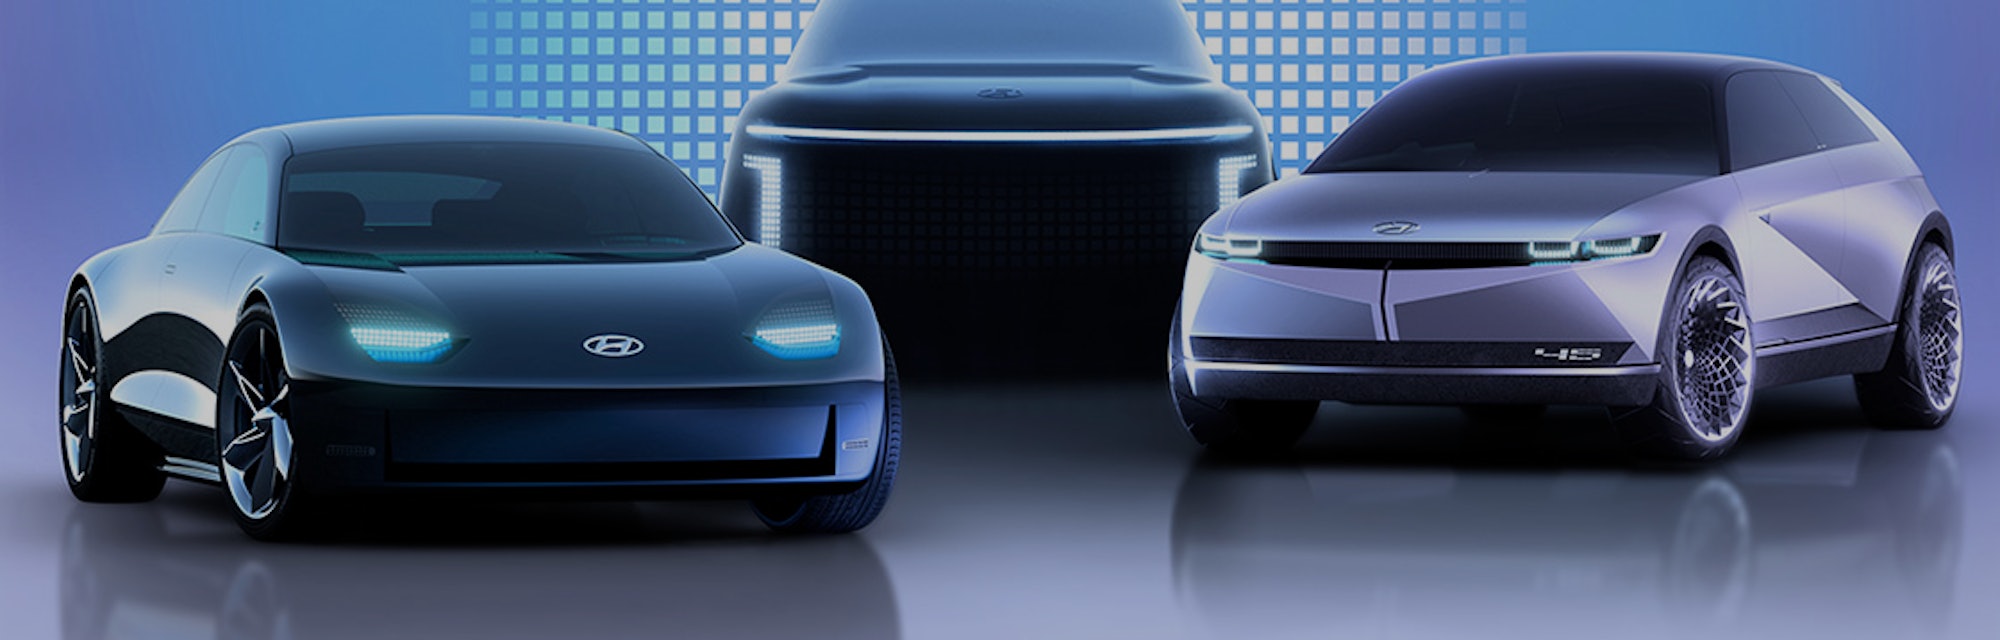 Hyundia's three forthcoming Ioniq electric vehicles.